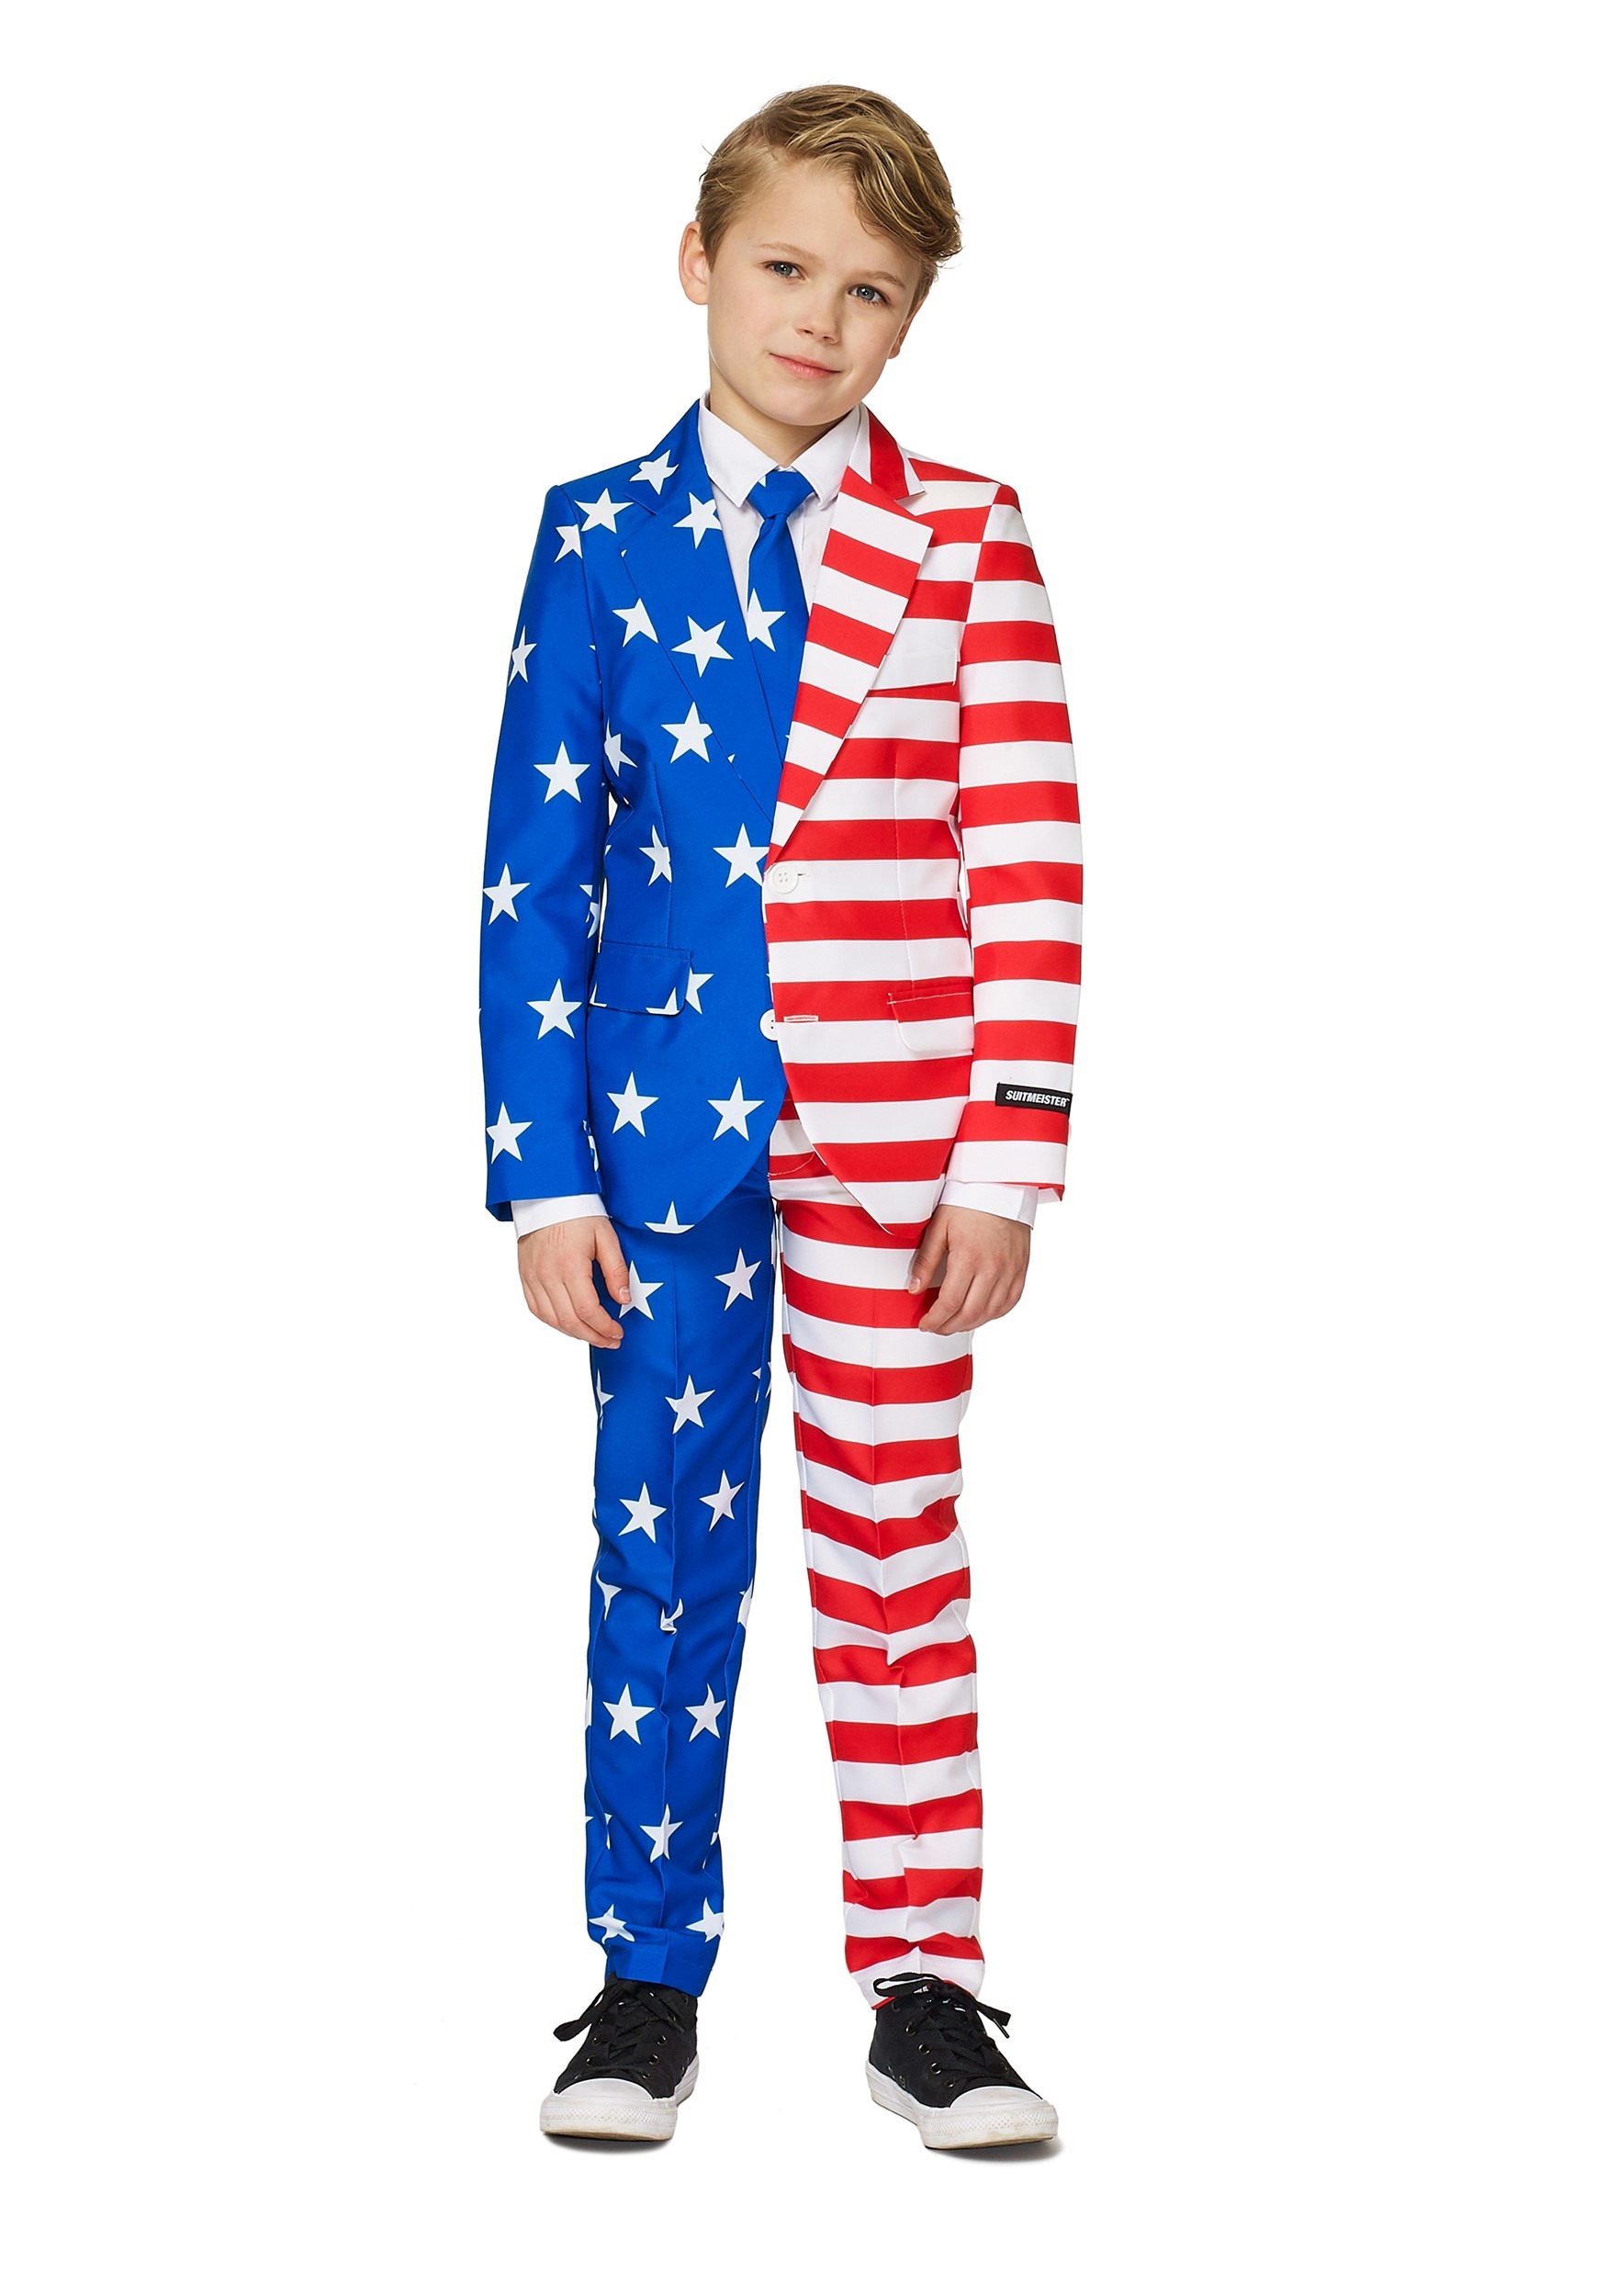 USA Flag Suitmeister Boys Suit